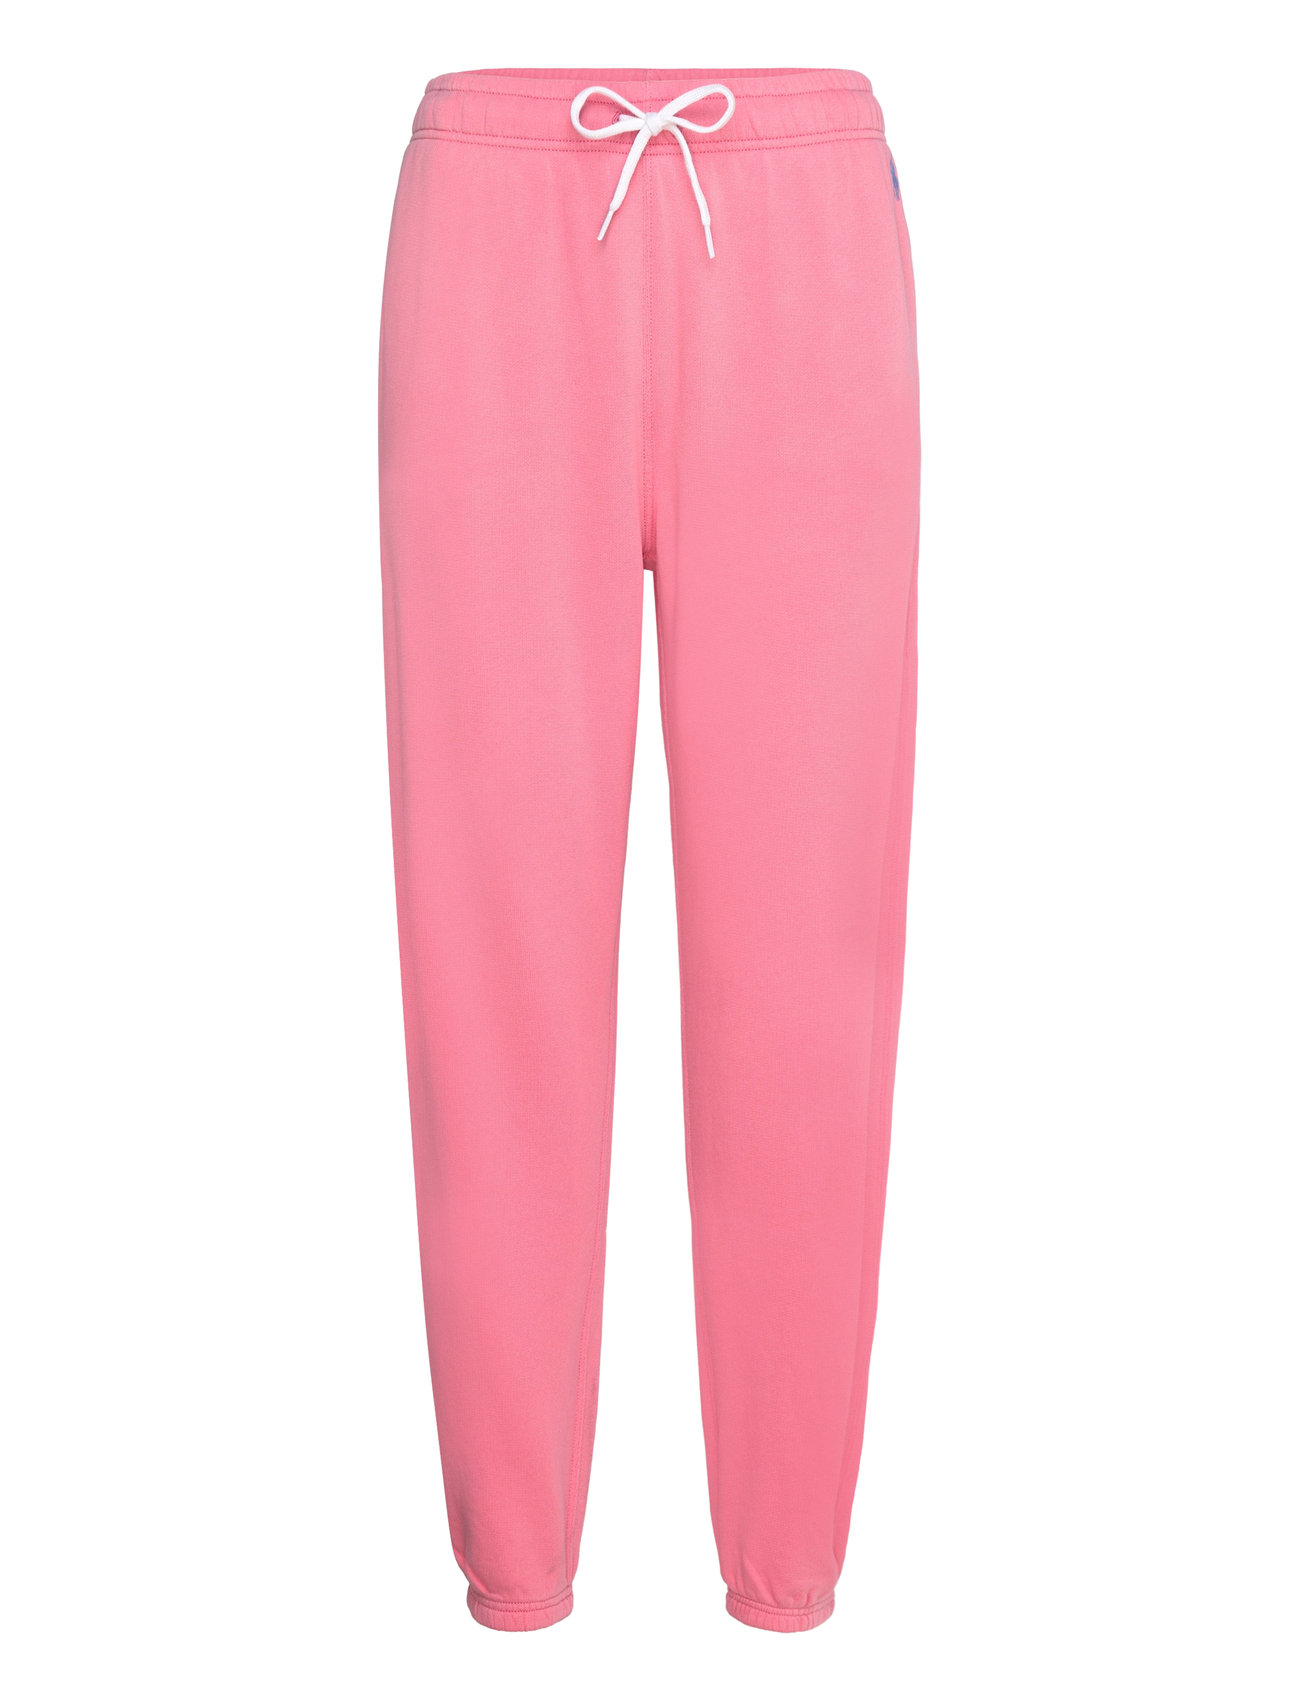 Fleece Athletic Pant Bottoms Sweatpants Pink Polo Ralph Lauren